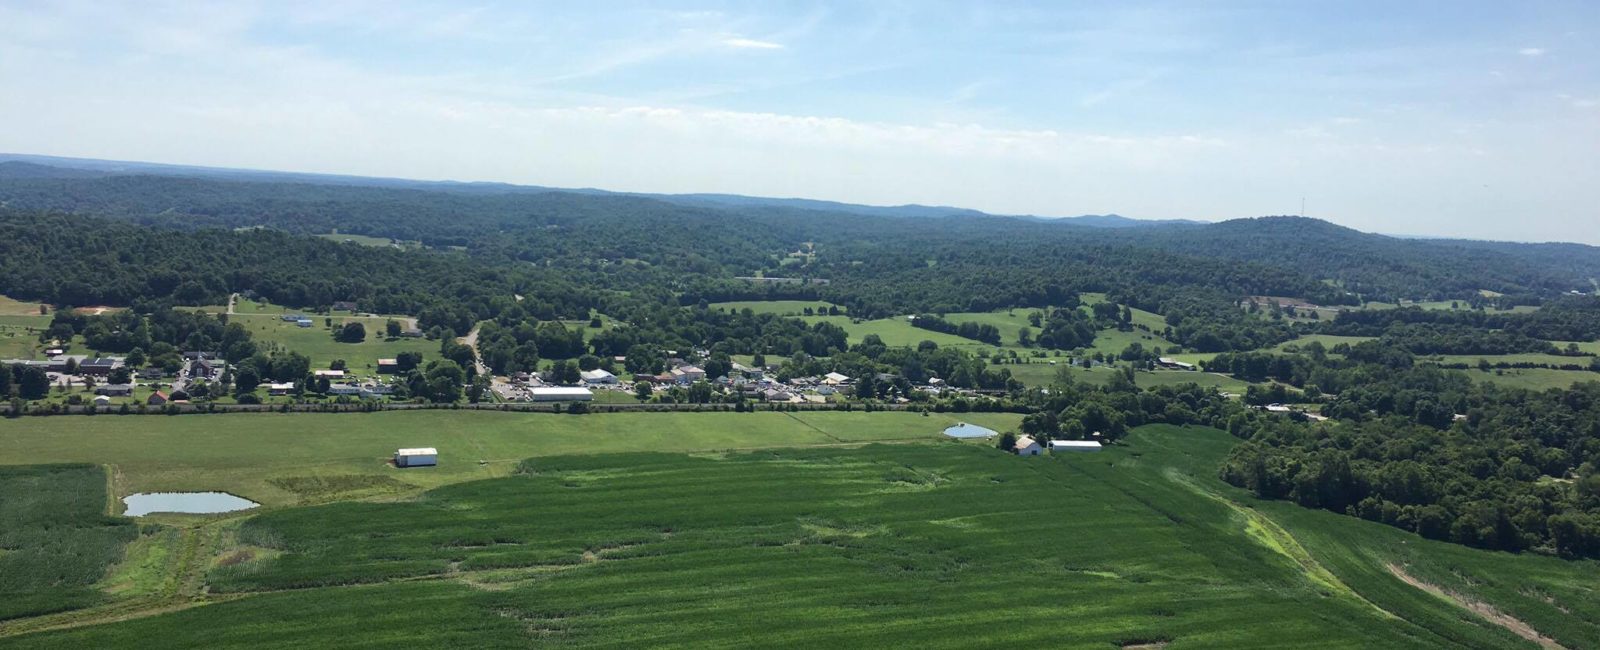 Bonnieville, aerial view